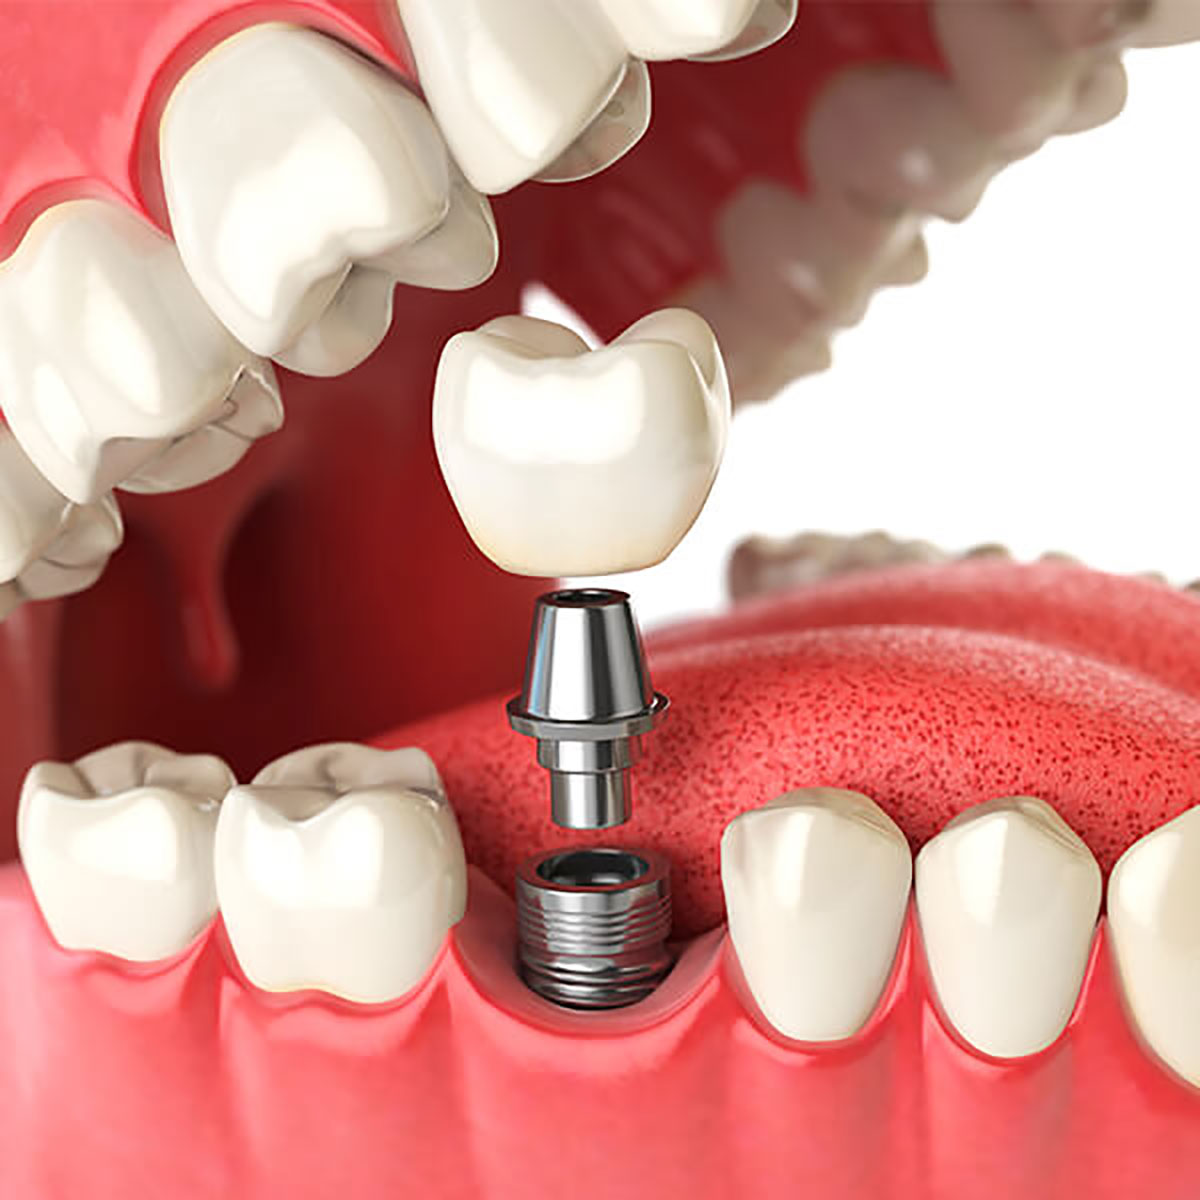 All-on-4® Implants - Bellevue All on 4 Dental Implants